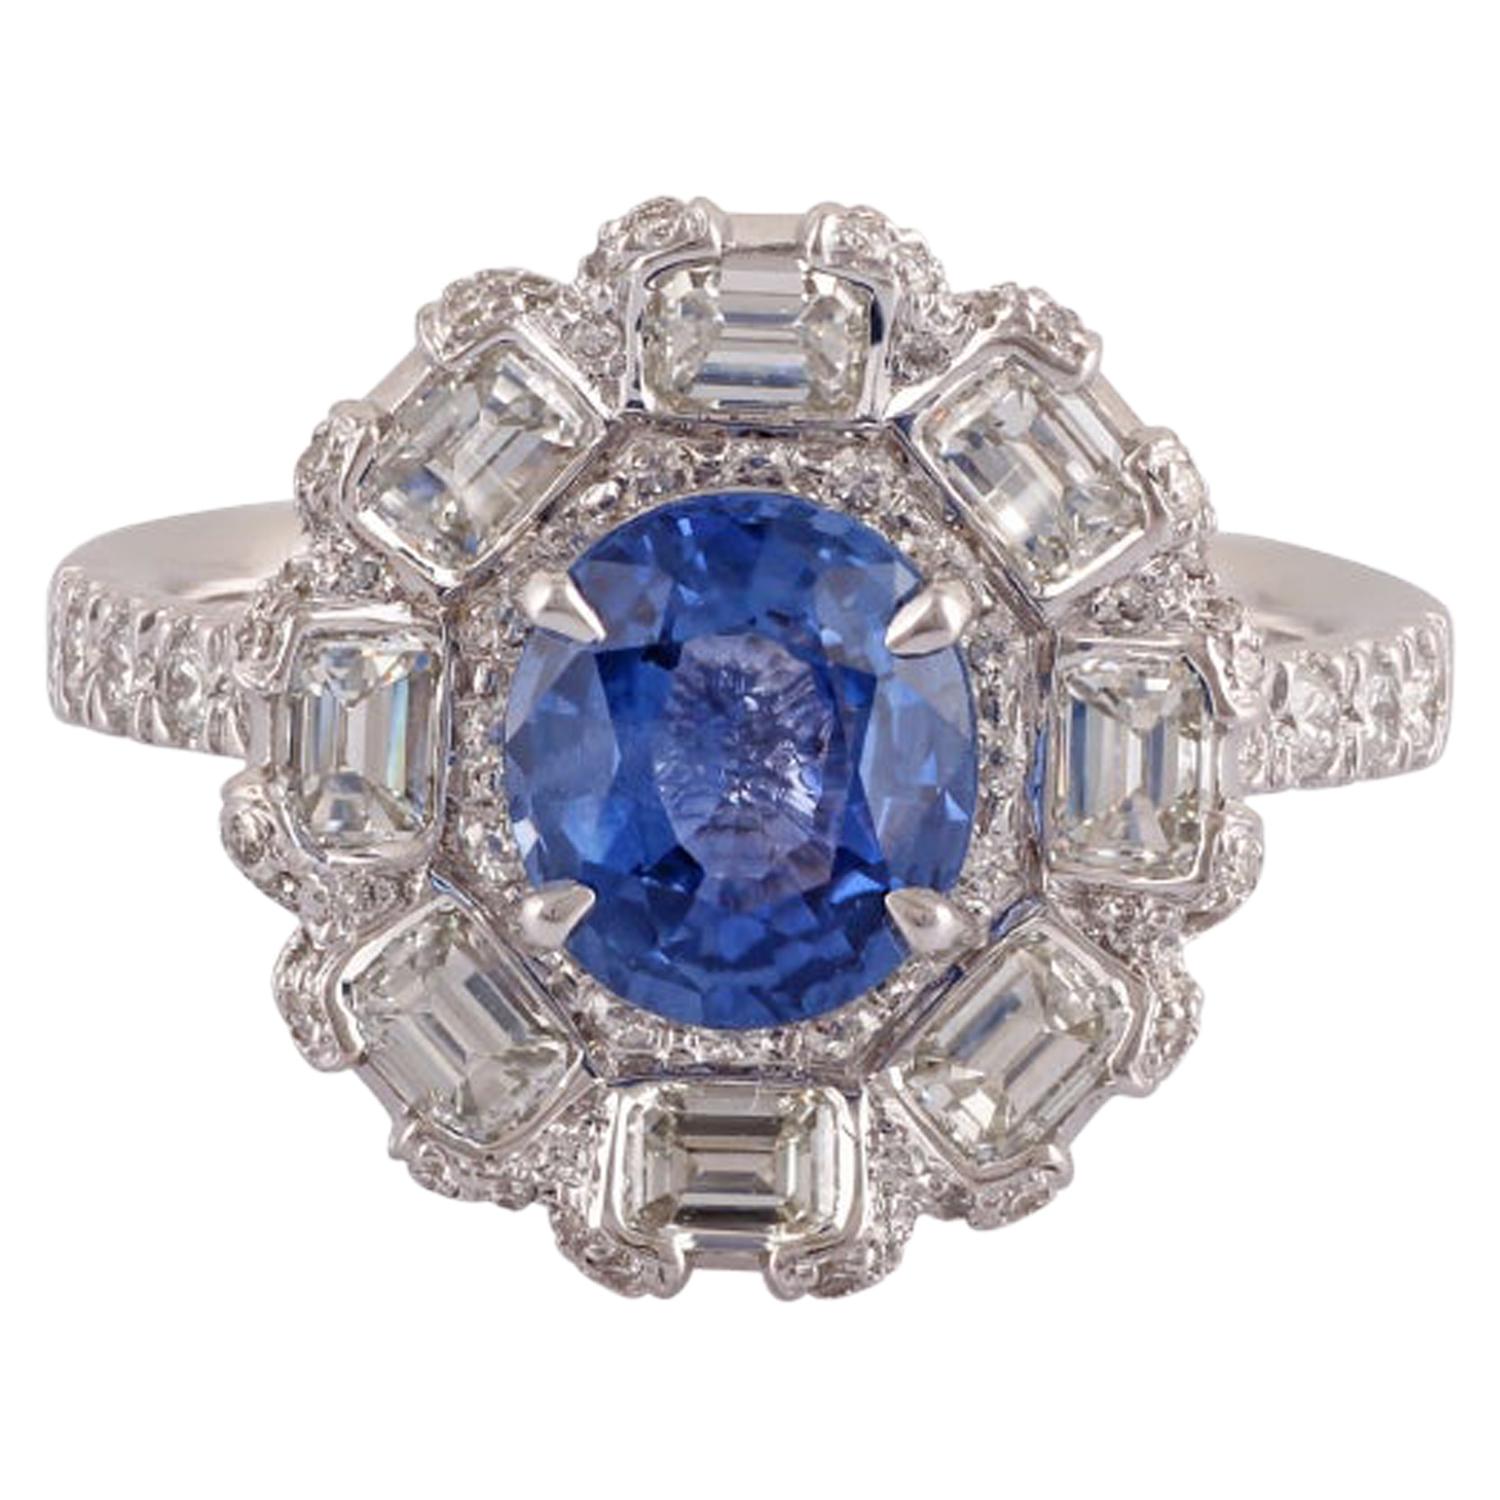 1.83 Carat Blue Sapphire and Diamond Ring in 18 Karat White Gold